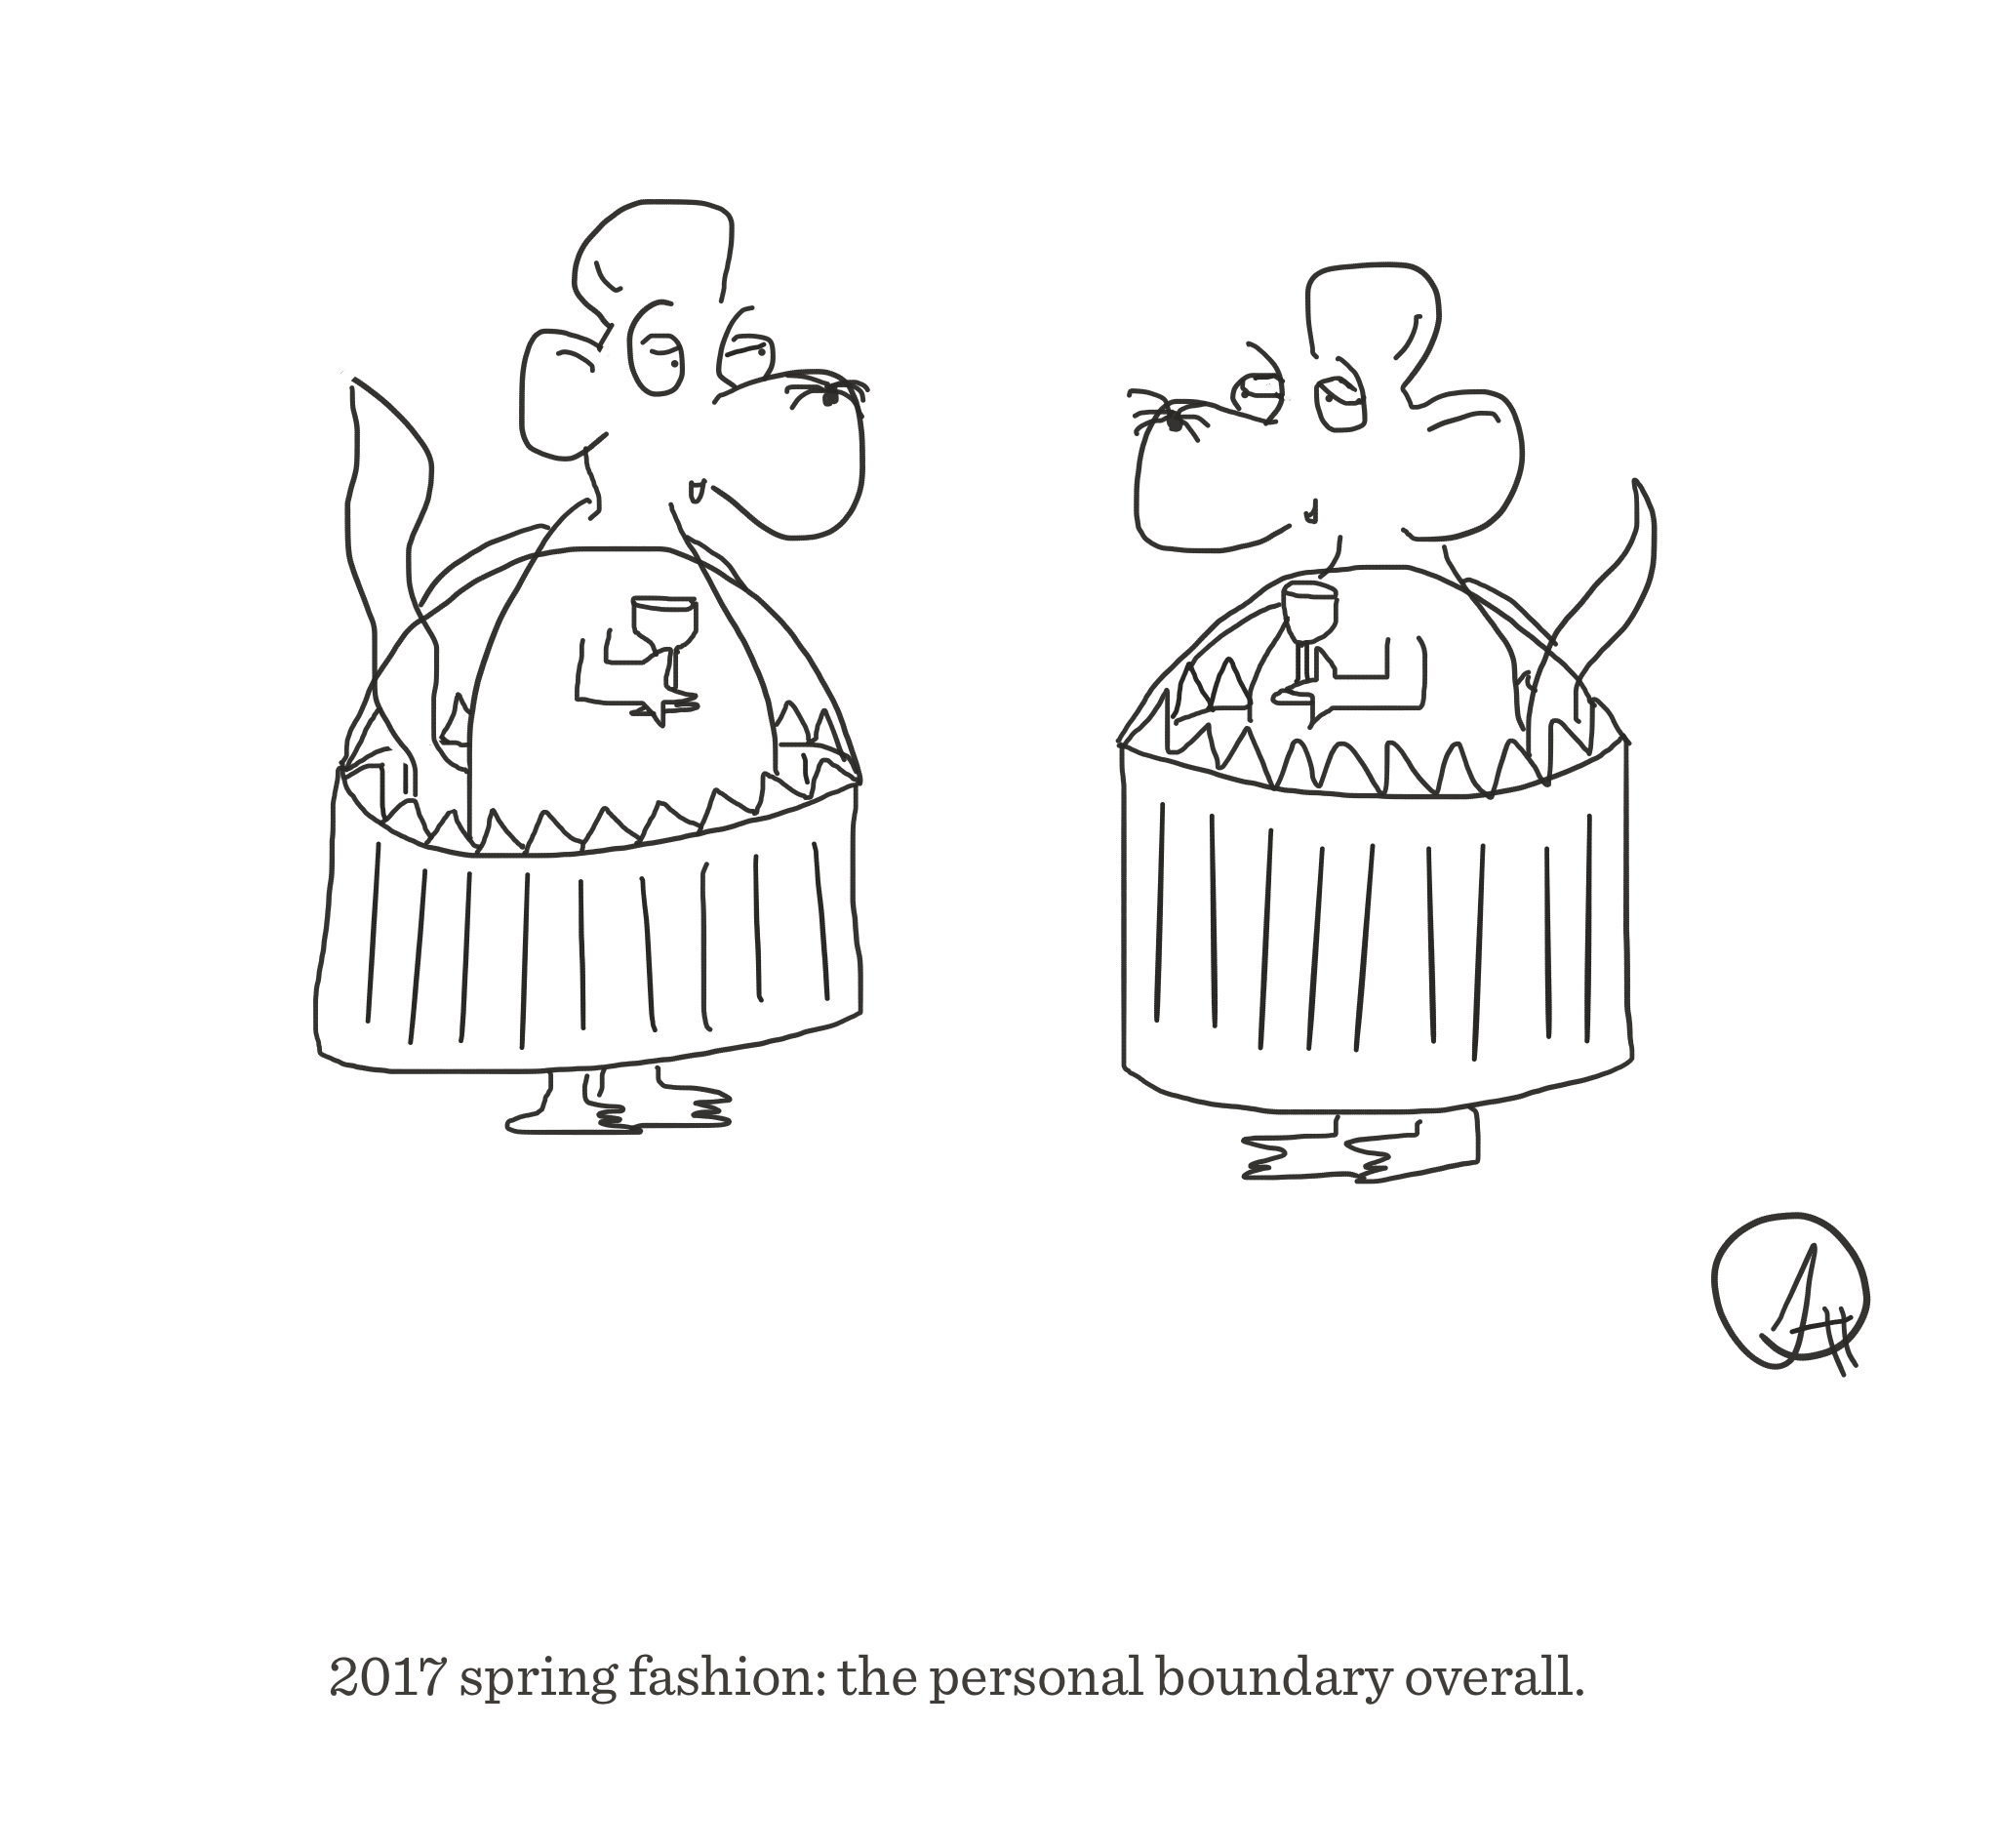 Personal boundary overalls, The Happy Rat cartoon